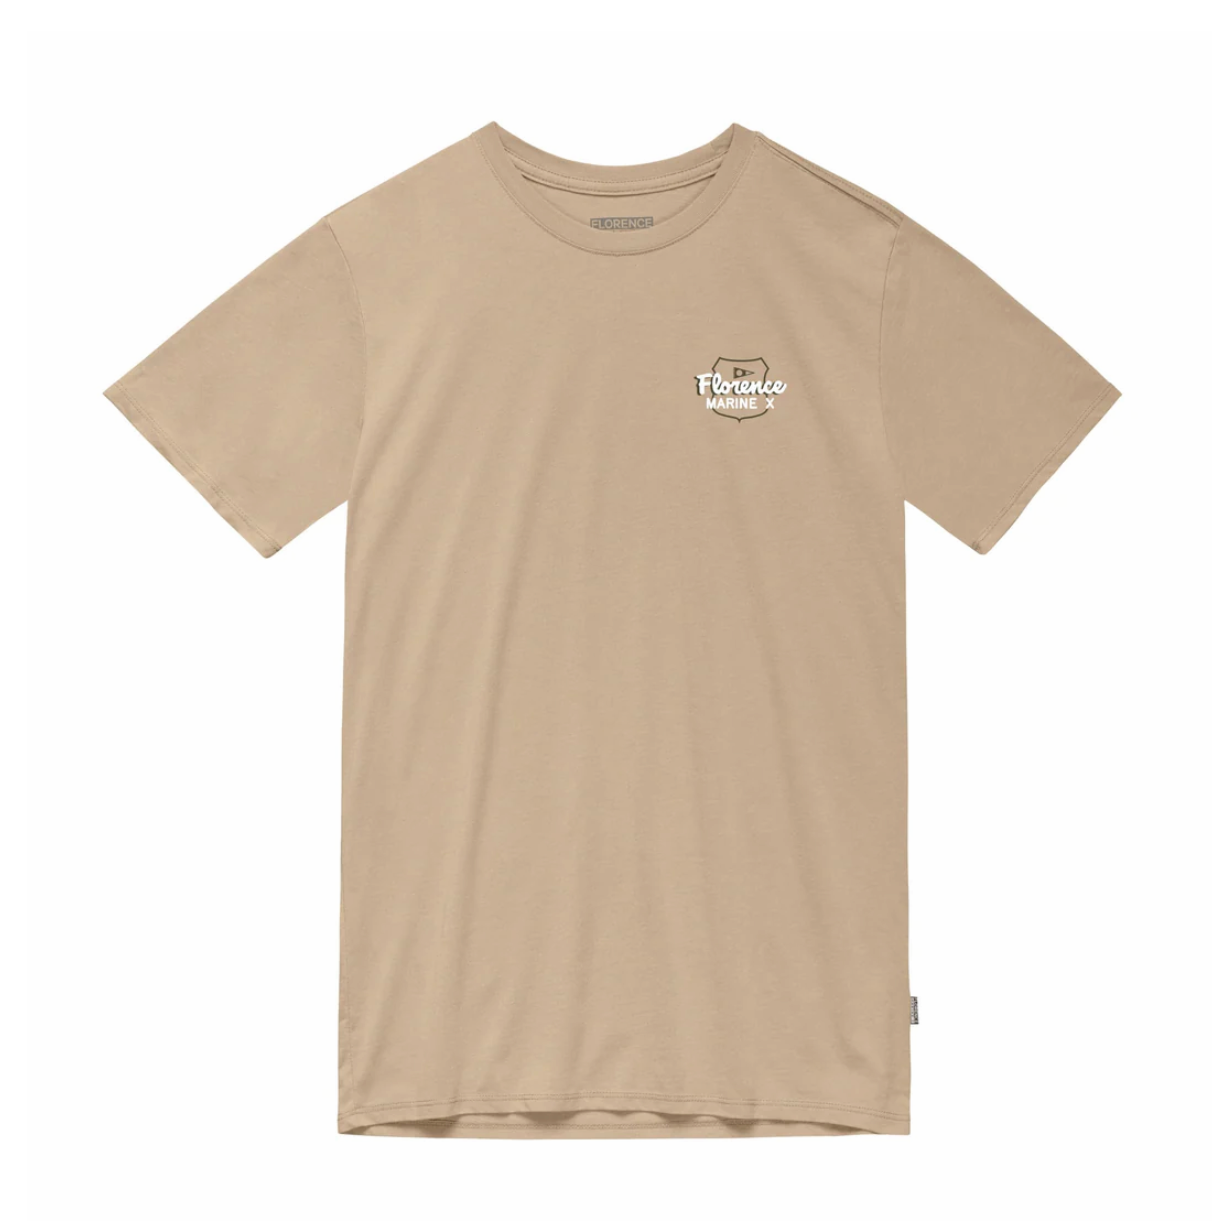 Florence Marine X - State Park Organic T-Shirt TAN - Board Store Florence Marine XShirts & Tops  